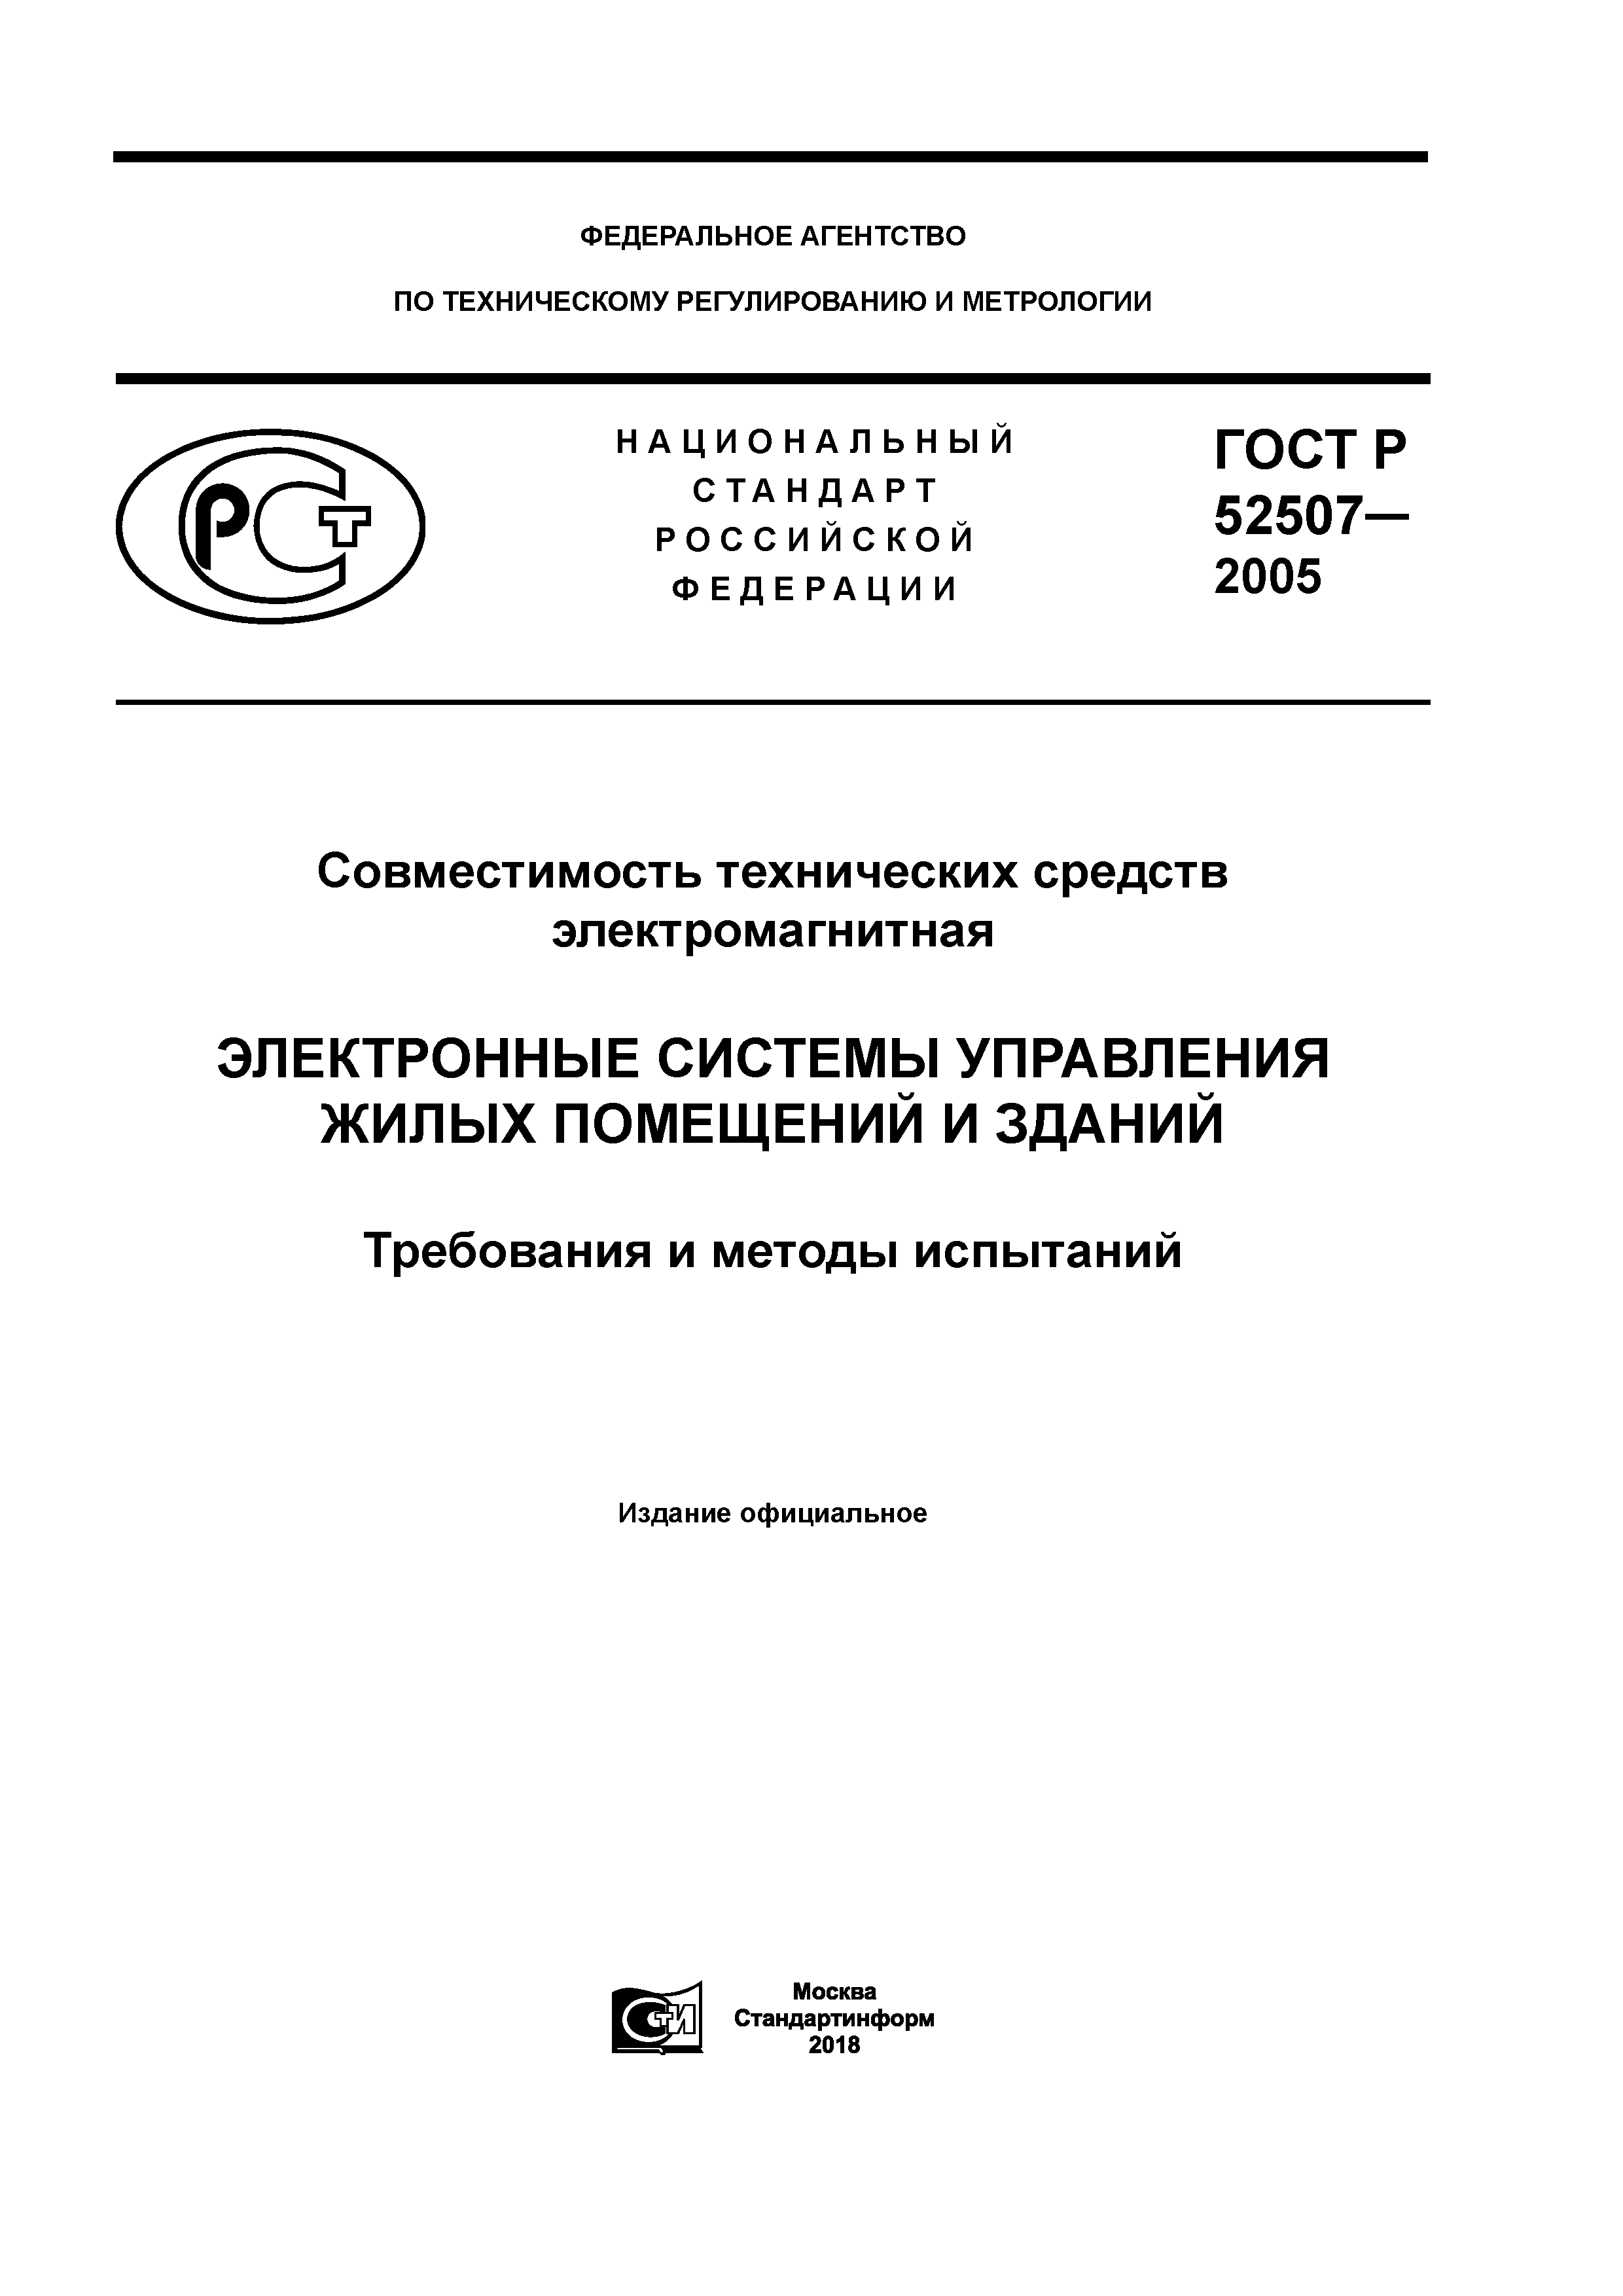 ГОСТ Р 52507-2005